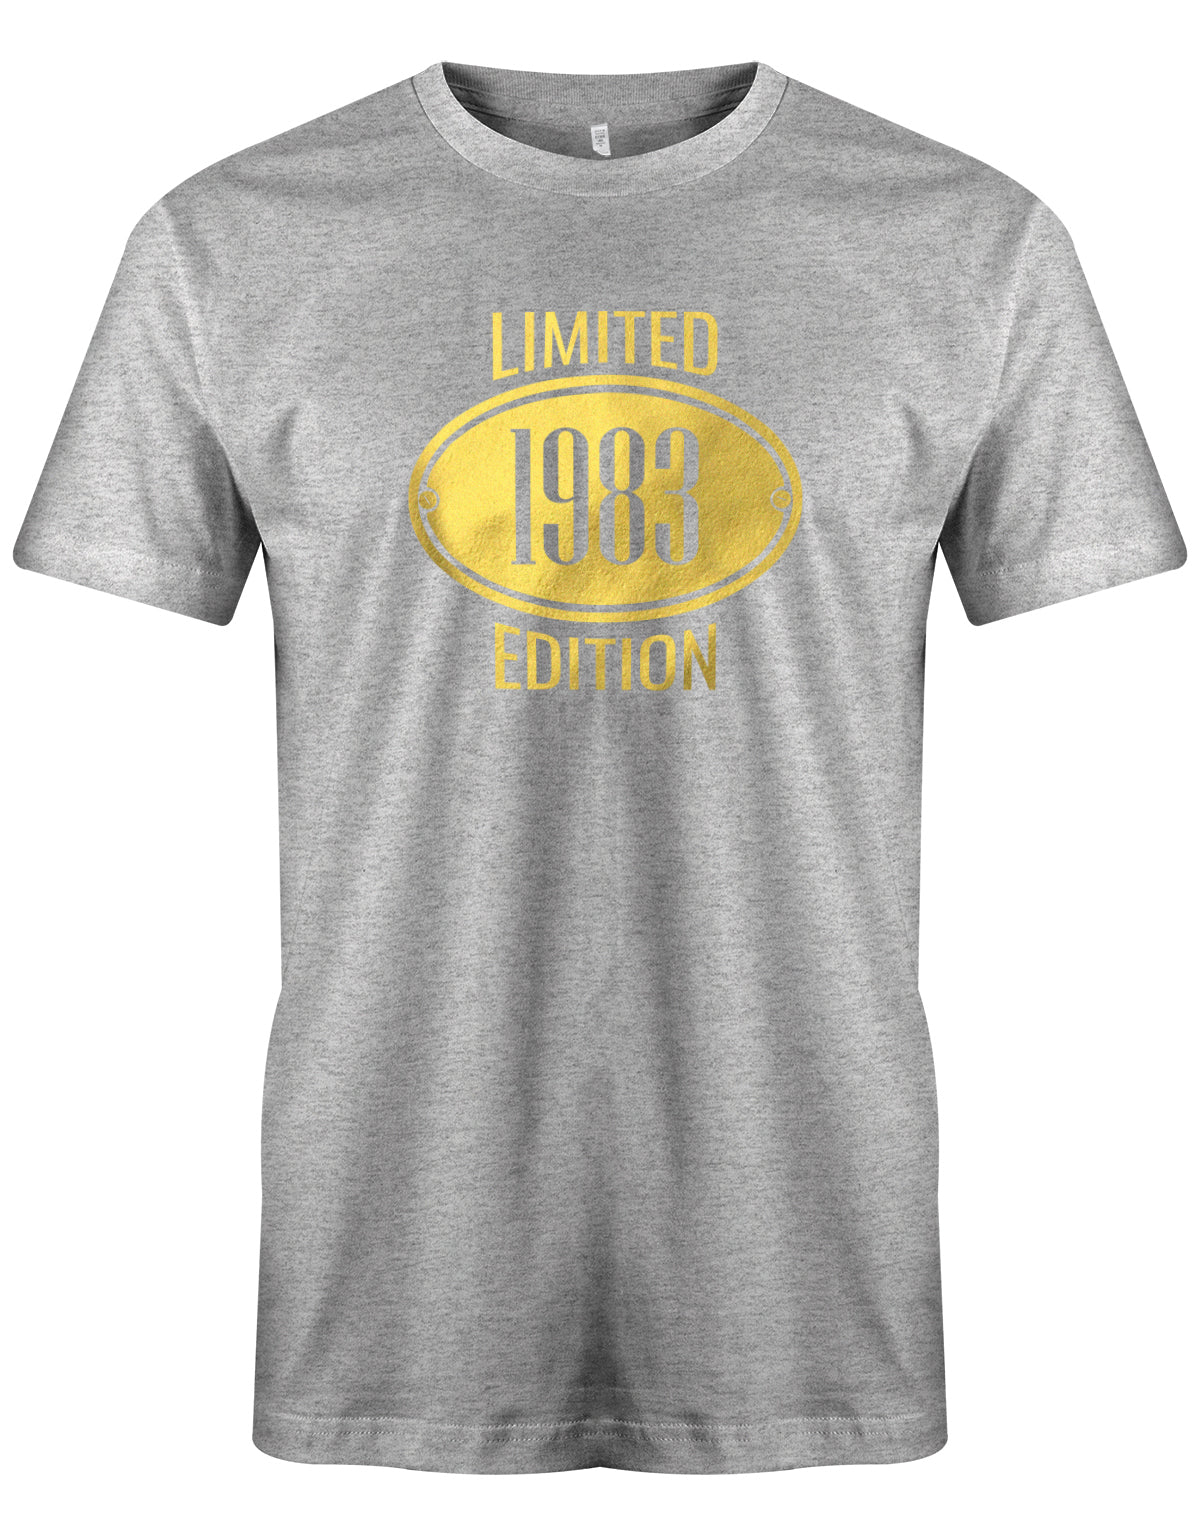 Limited Edition Gold 1983 - T-Shirt 40 Geburtstag Männer myShirtStore Grau